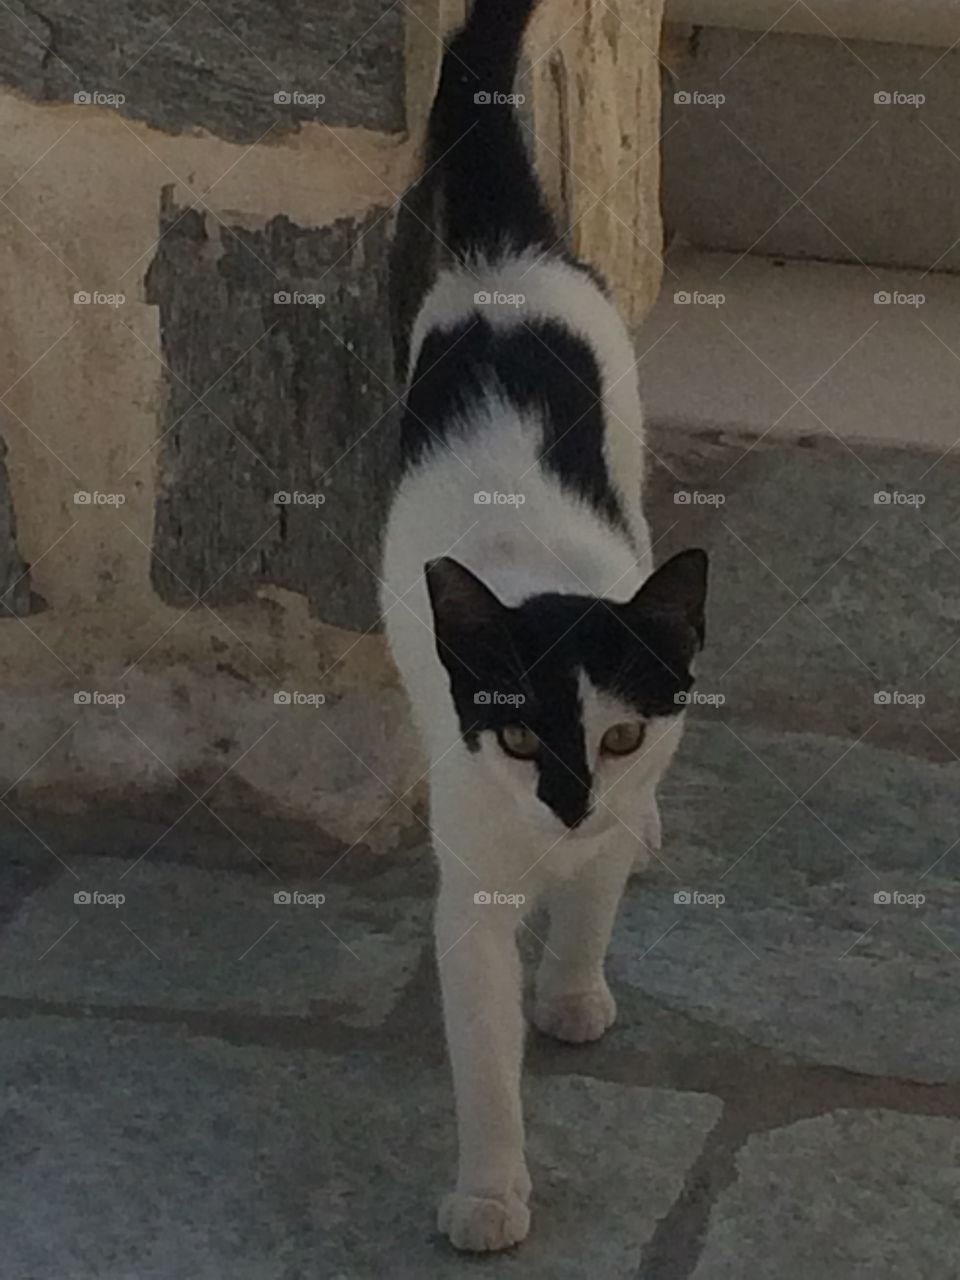 Black and white cat